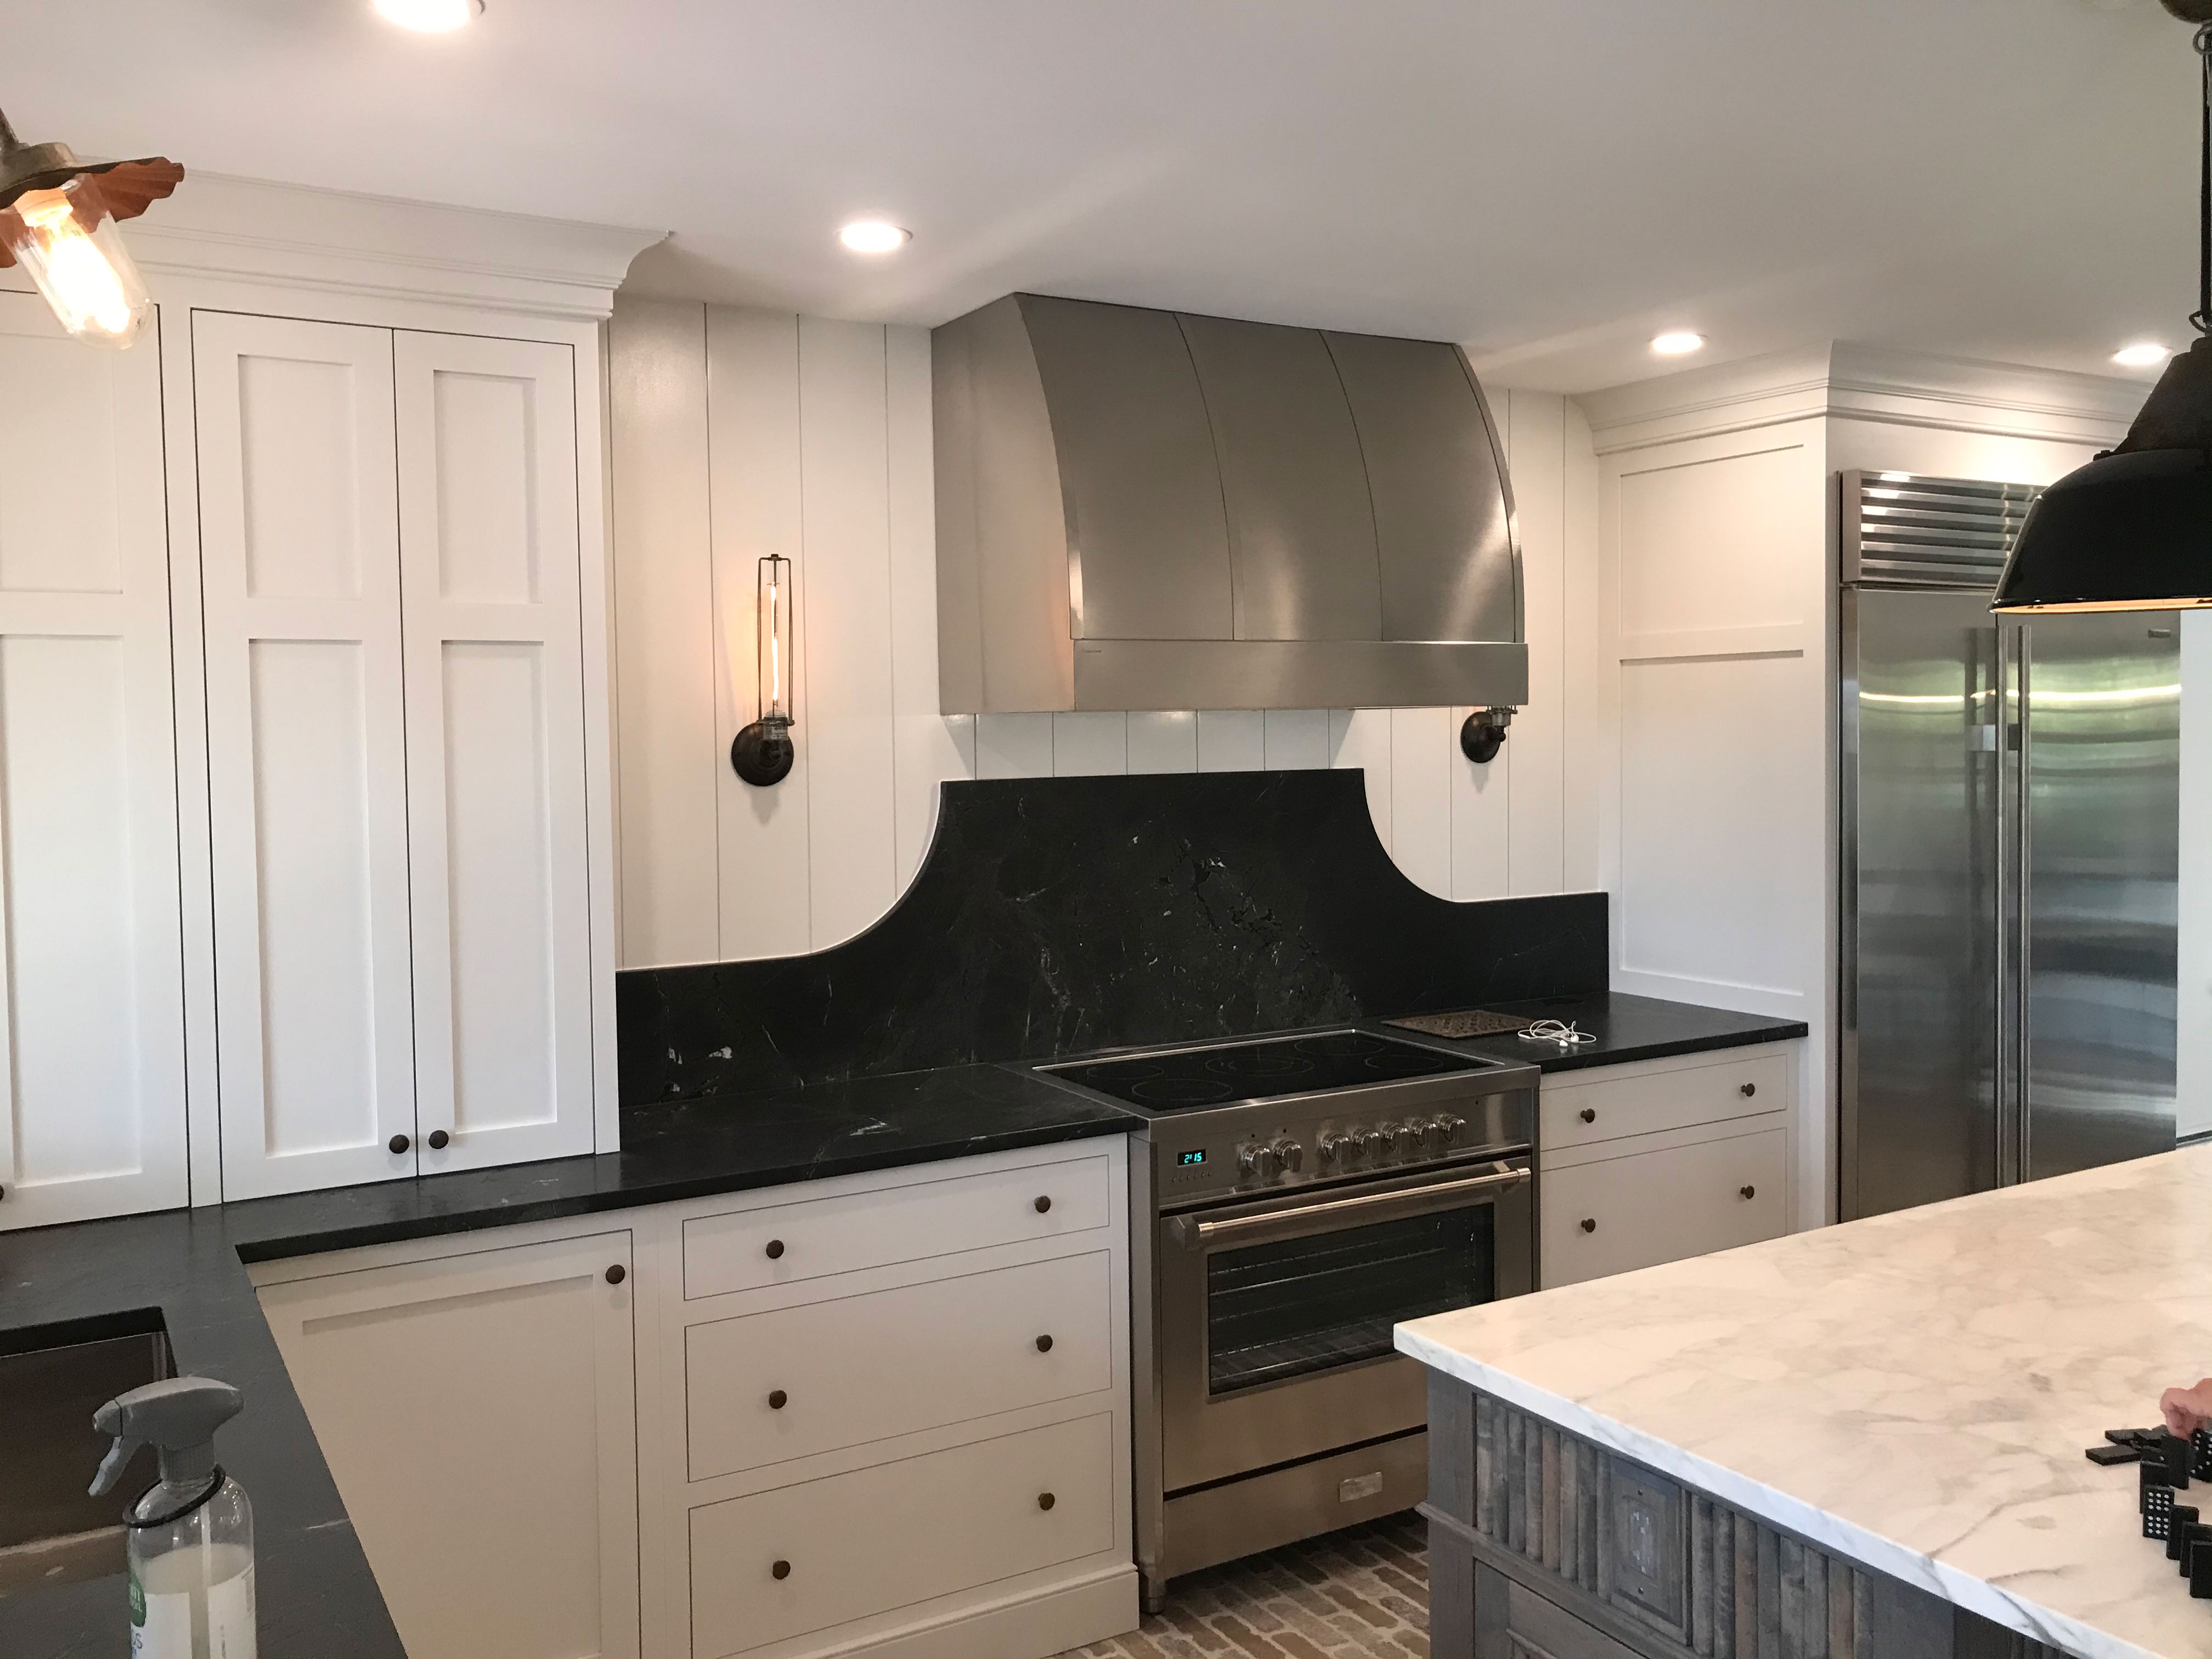 Craftsman kitchen concepts with range hood white kitchen cabinets, black kitchen countertops, marble backsplash